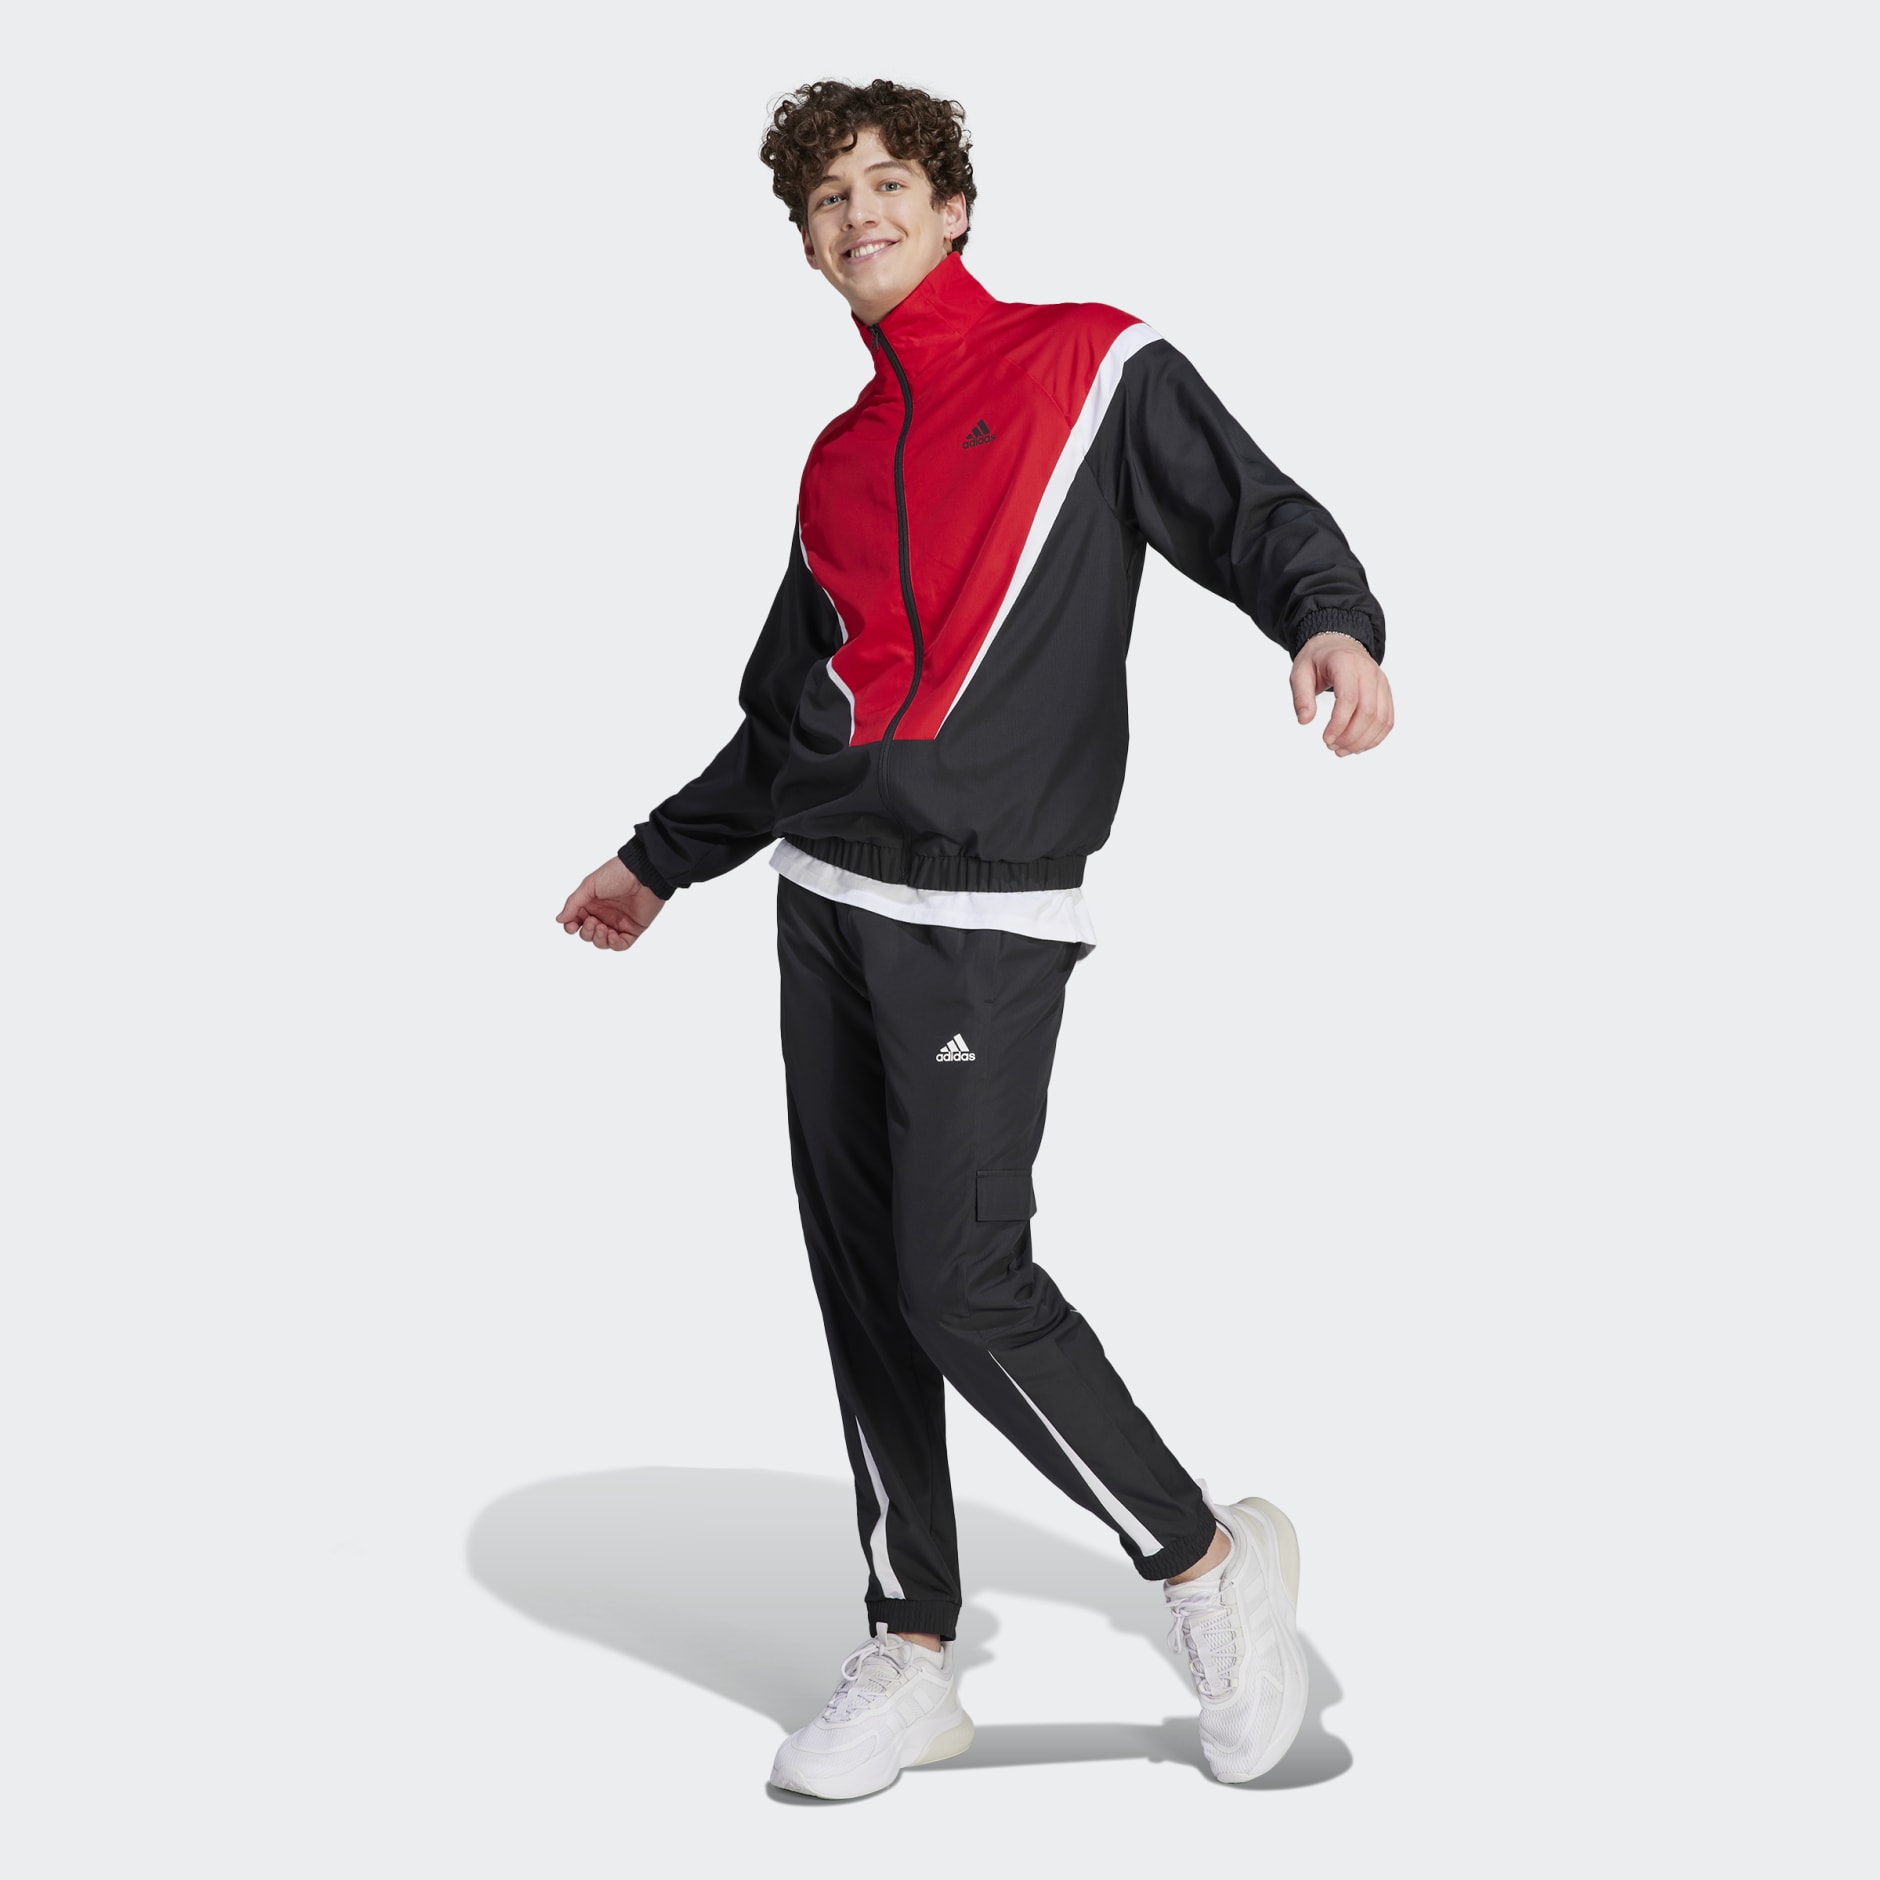 Kendall Jenner's Adidas Track Suit | POPSUGAR Fashion UK